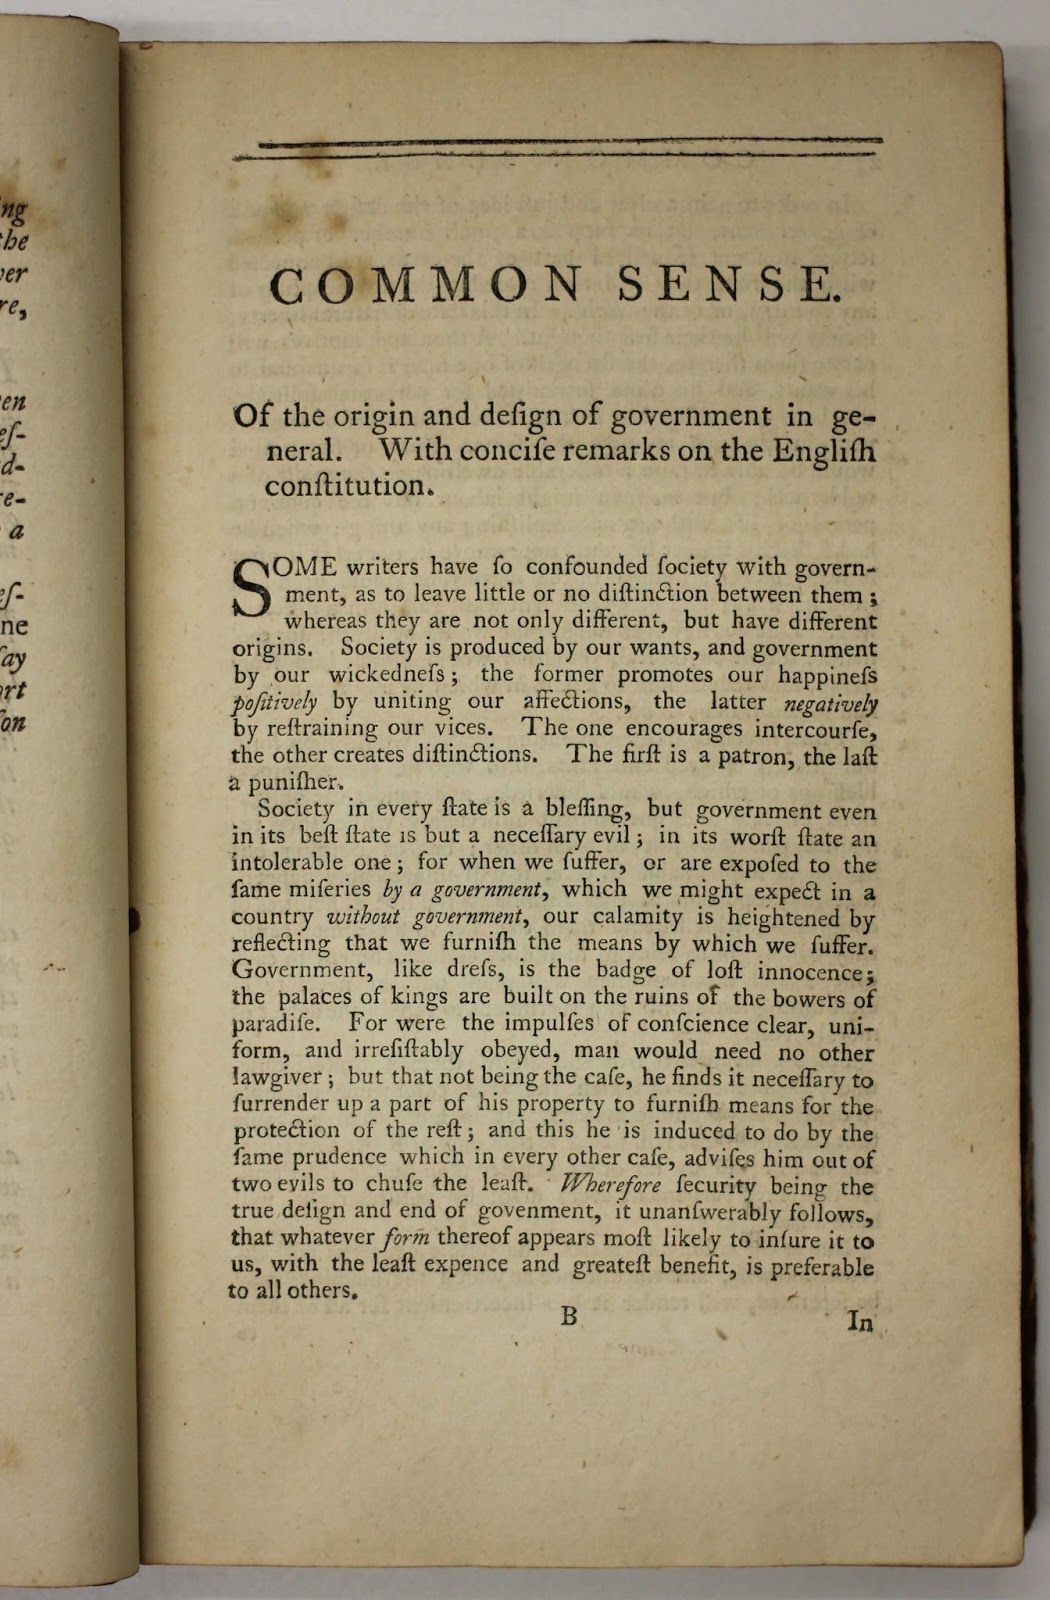 brandeis-special-collections-spotlight-thomas-paine-s-common-sense-1776